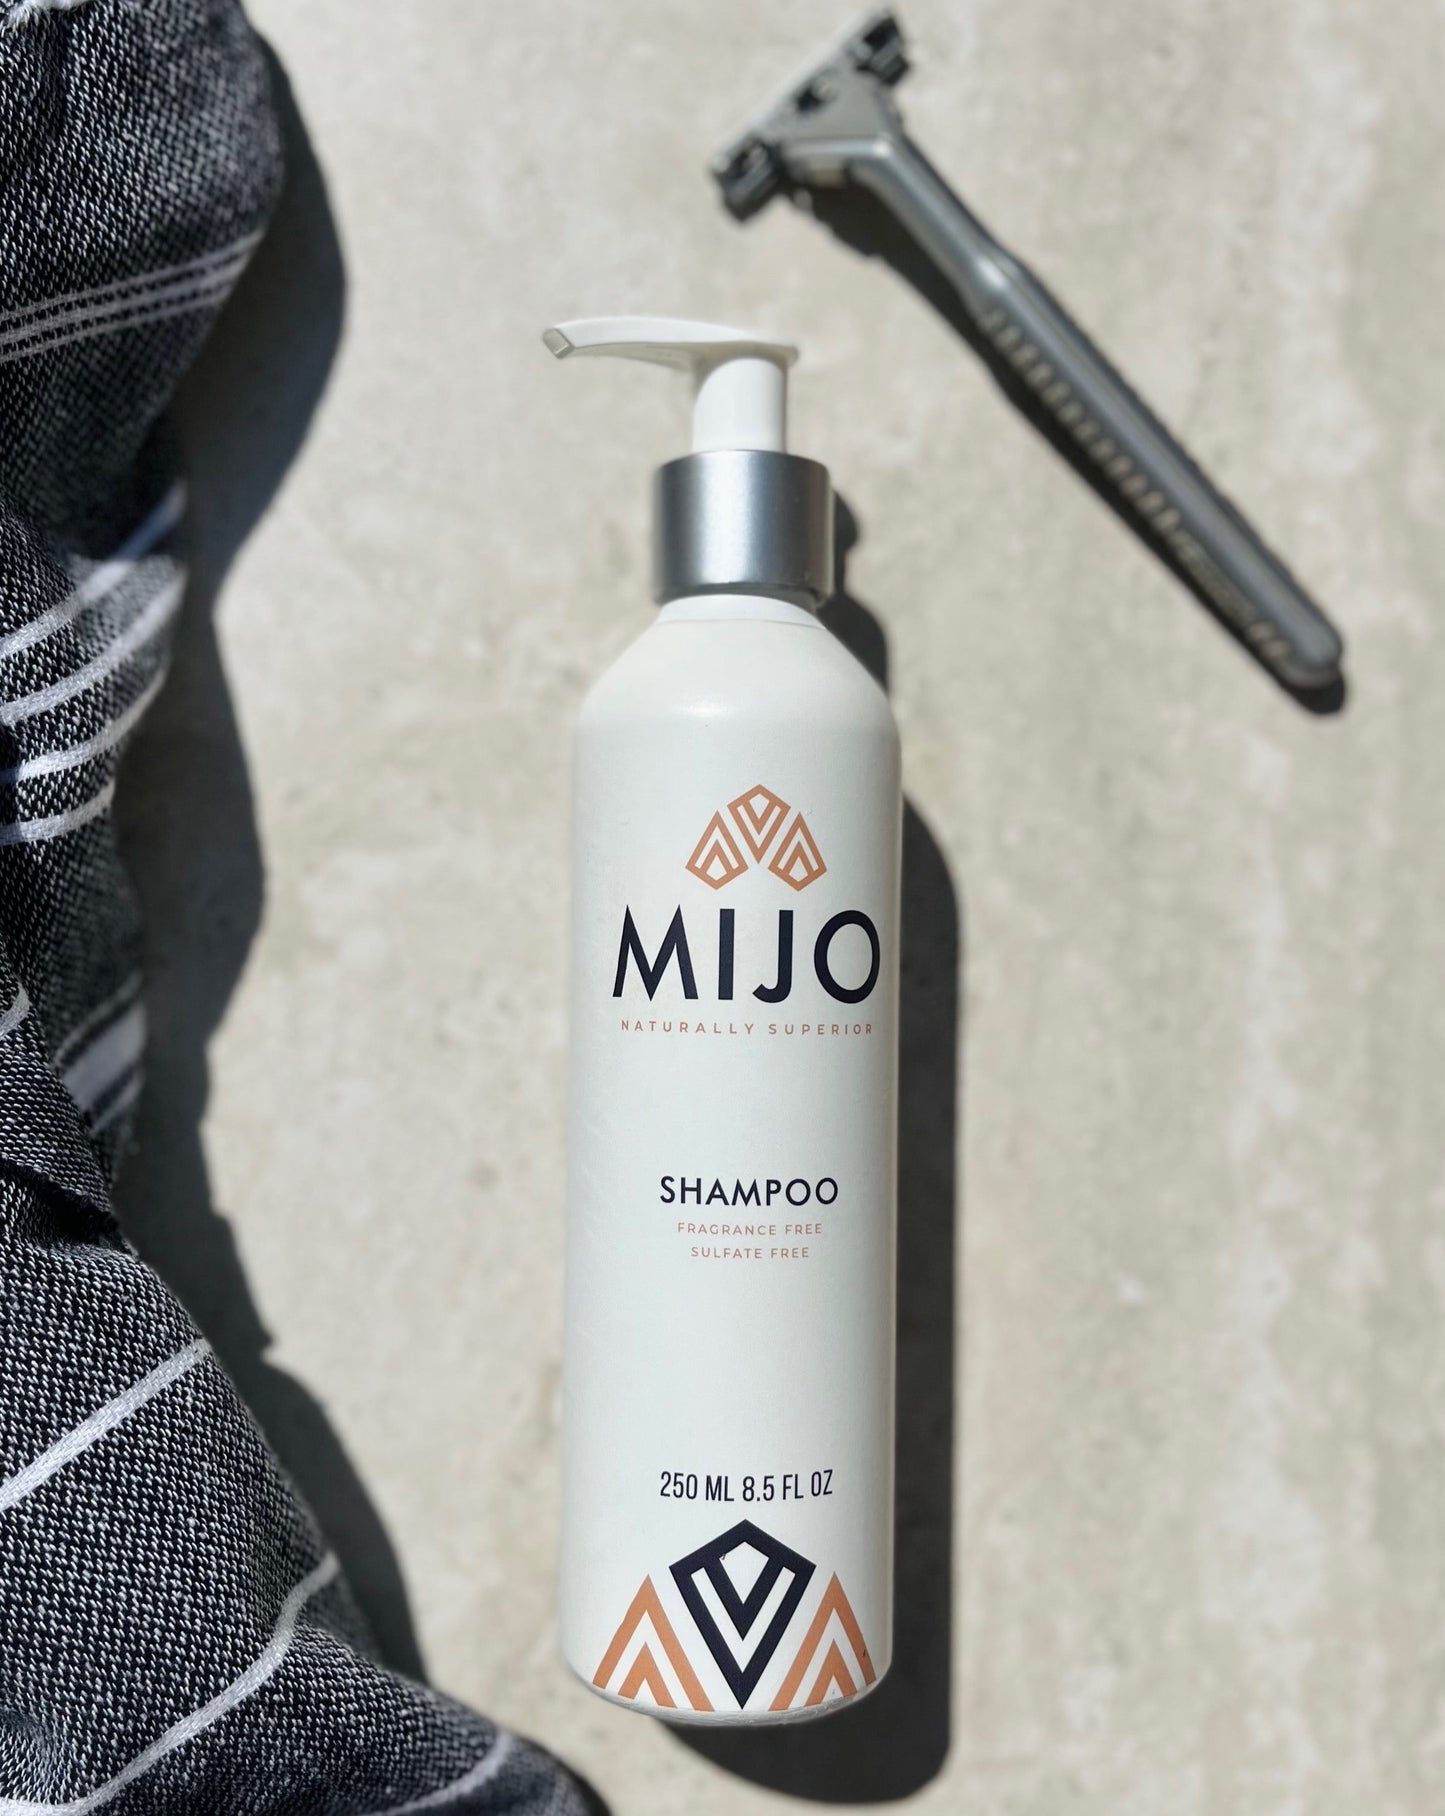 Mijo® Natural “Highlight My Hair” Shampoo for Men - Fragrance Free